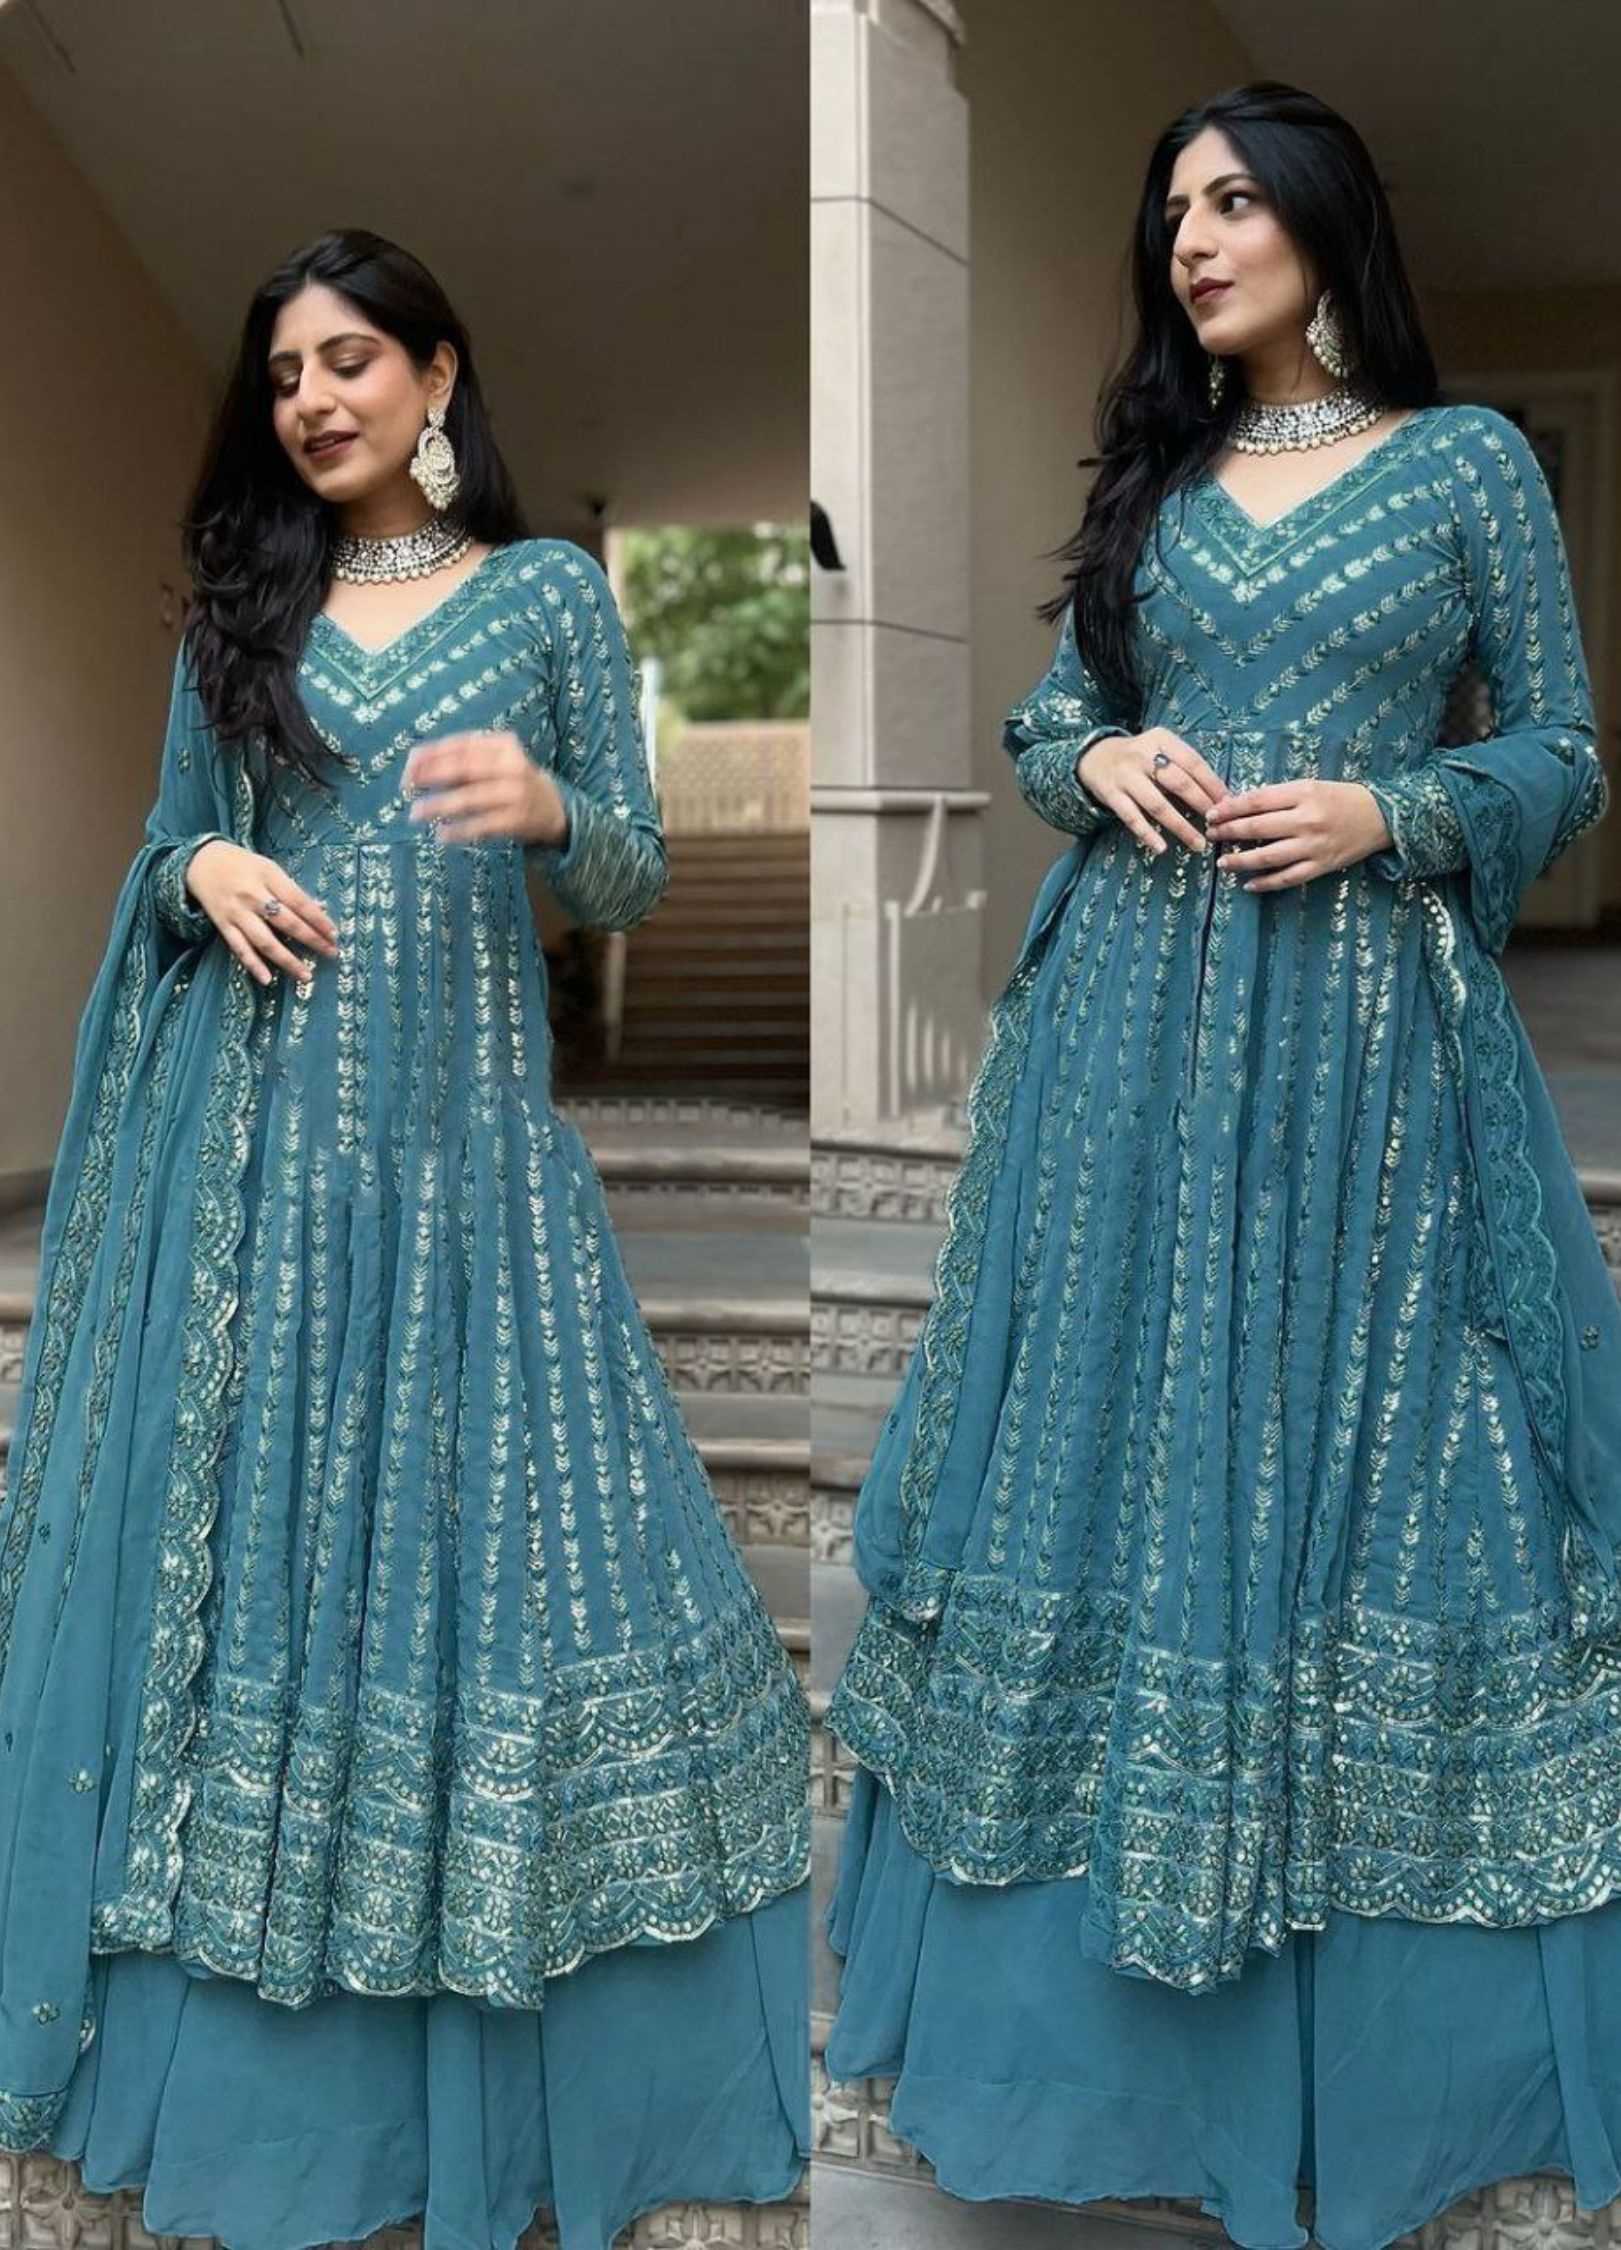 Wedding Dress Designer | Pakistani Wedding Dress Designs 2020